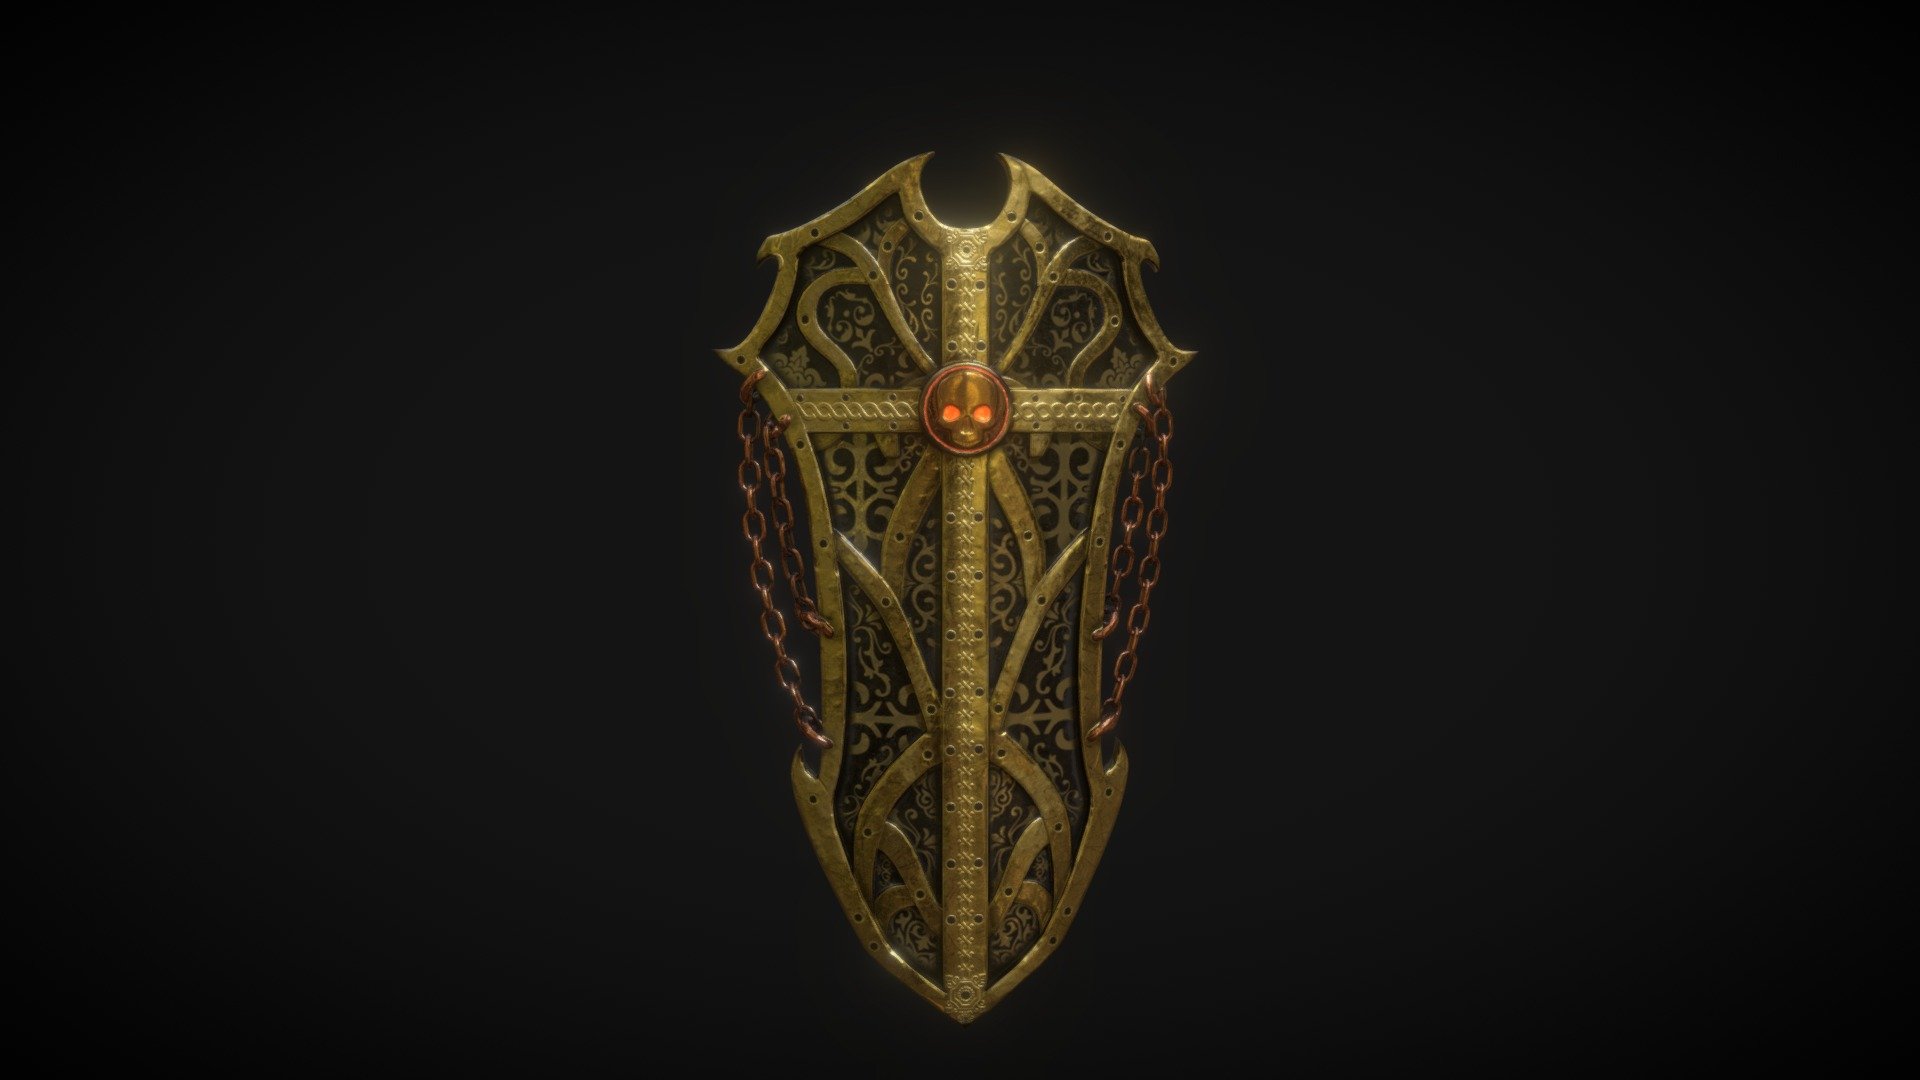 A fantasy tower shield, made from a concept art I found online.
https://www.artstation.com/artwork/vJ0Ev3 - Fantasy Tower Shield - 3D model by Obbasimus 3d model